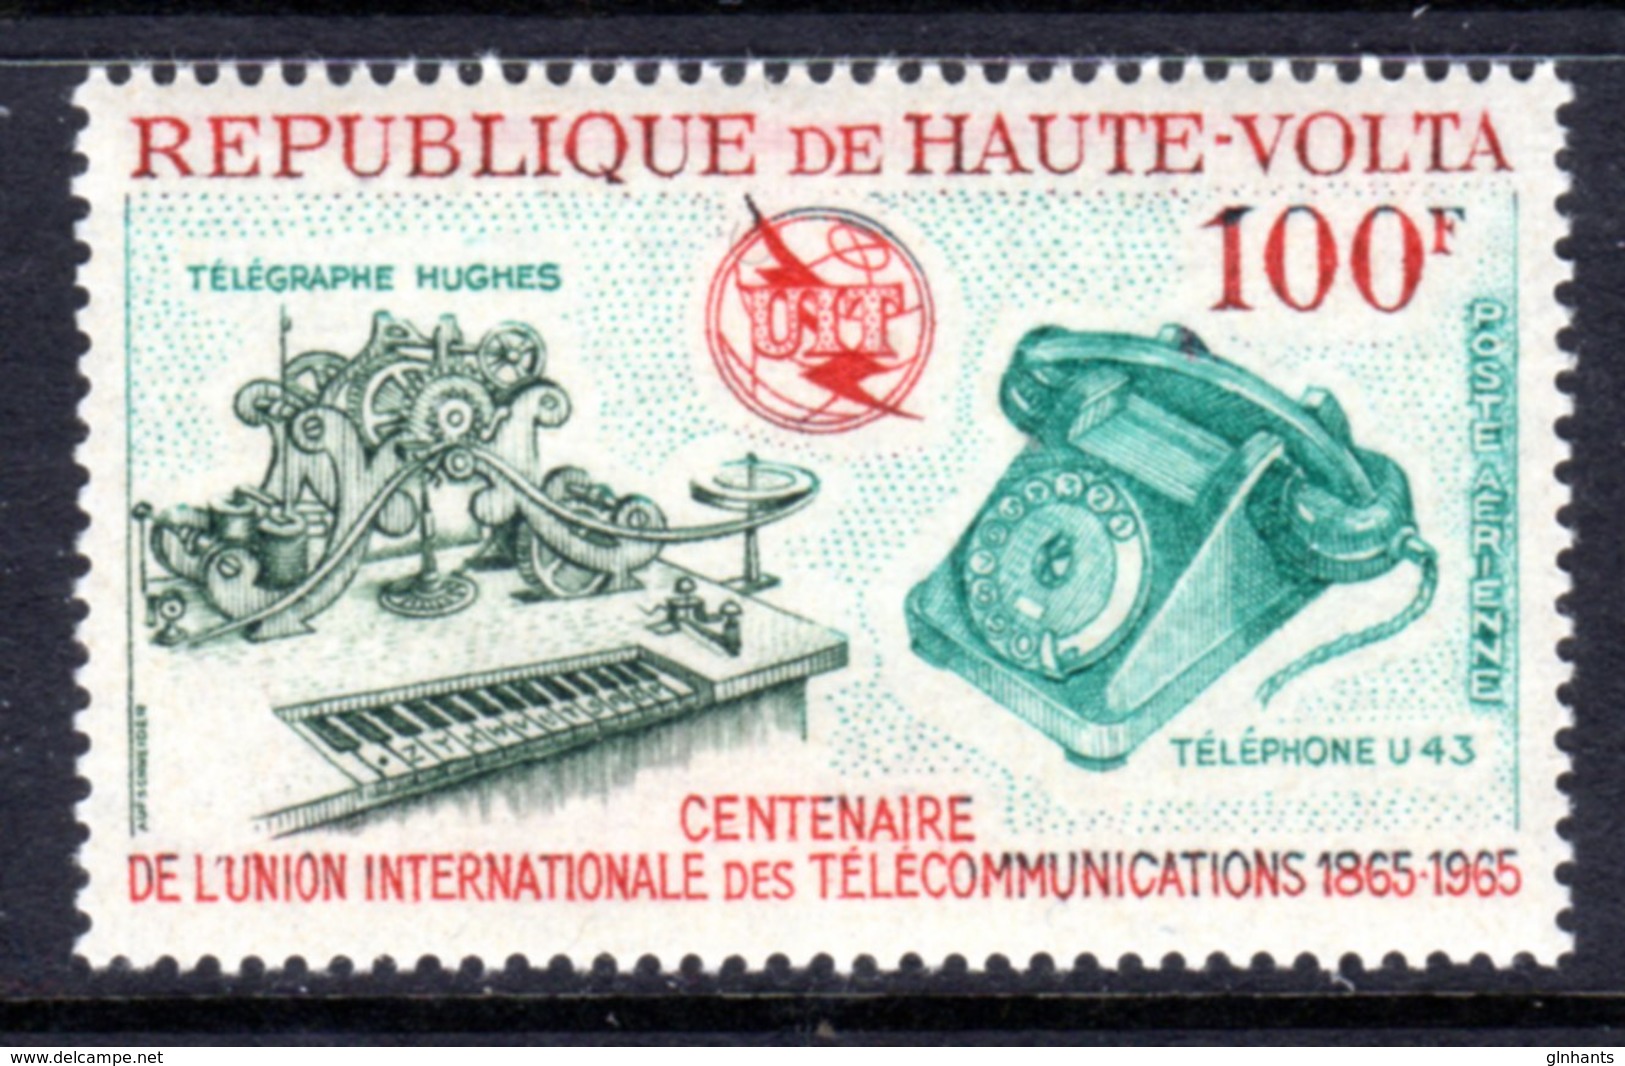 UPPER VOLTA - 1965 ITU INTERNATIONAL TELECOMMUNICATIONS ANNIVERSARY 100F STAMP FINE MNH ** SG 161 - Upper Volta (1958-1984)